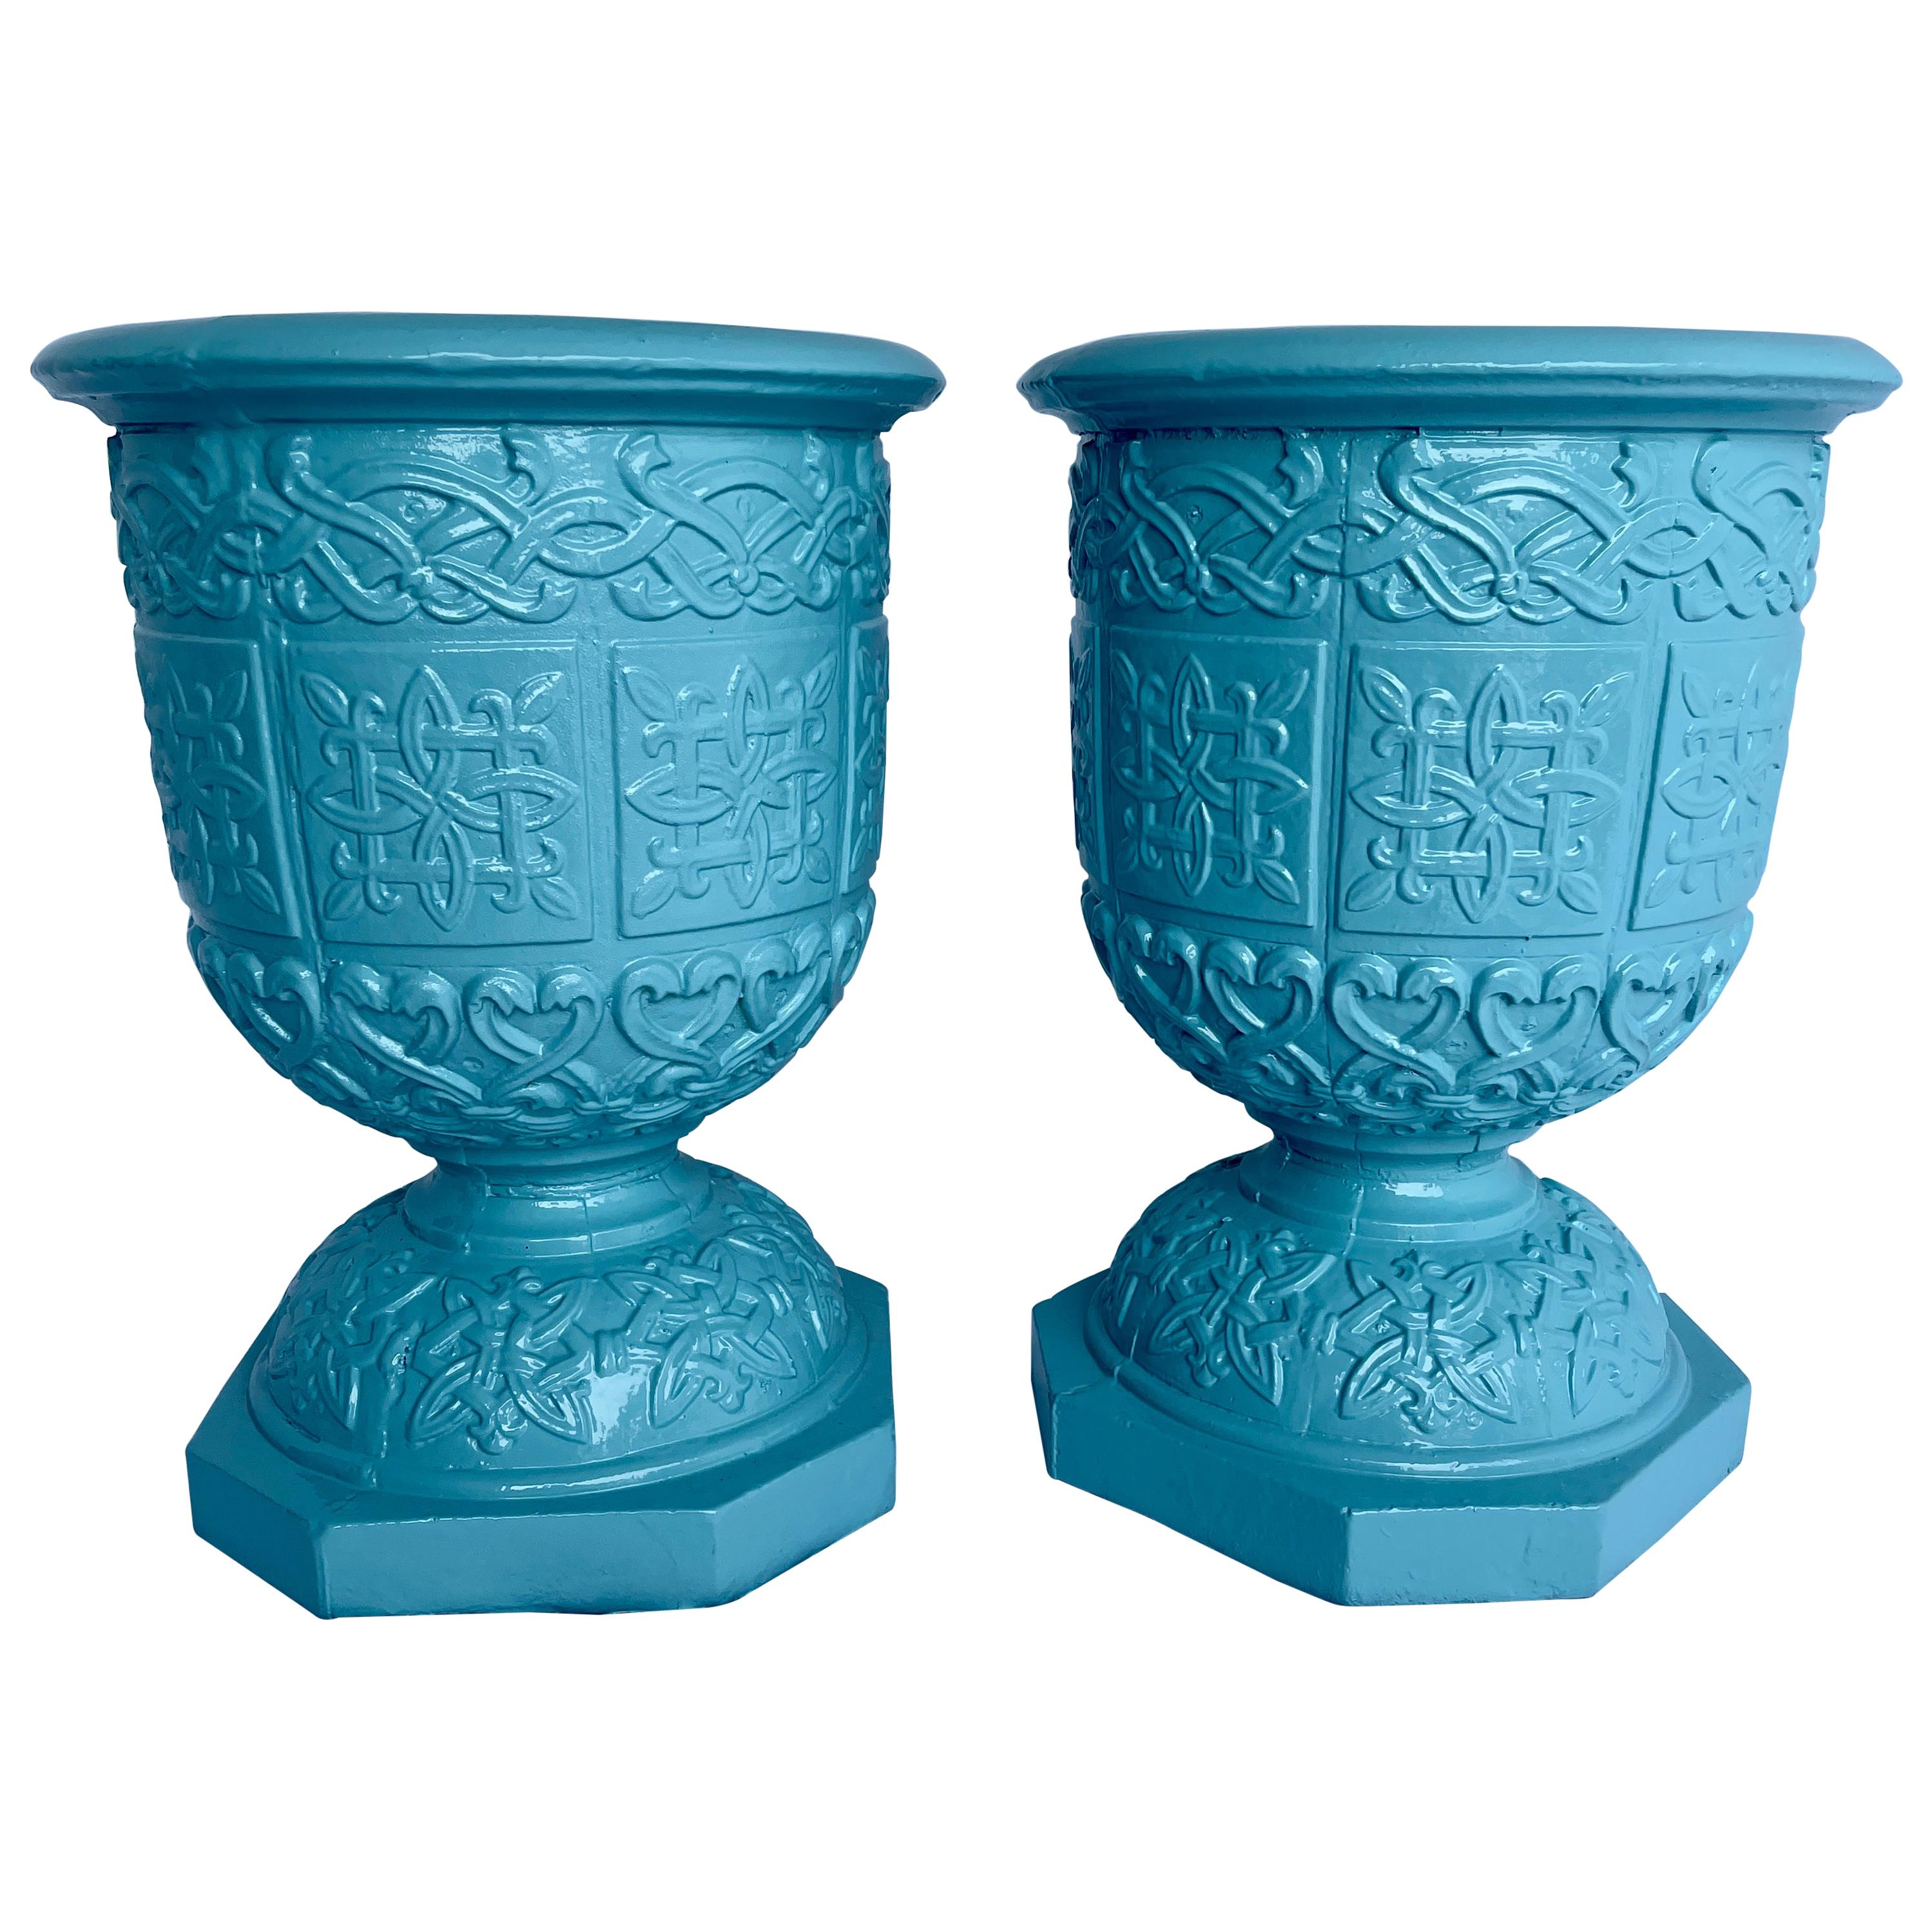 Pair Large Cast Iron Garden Urns, Powder Coated Turquoise